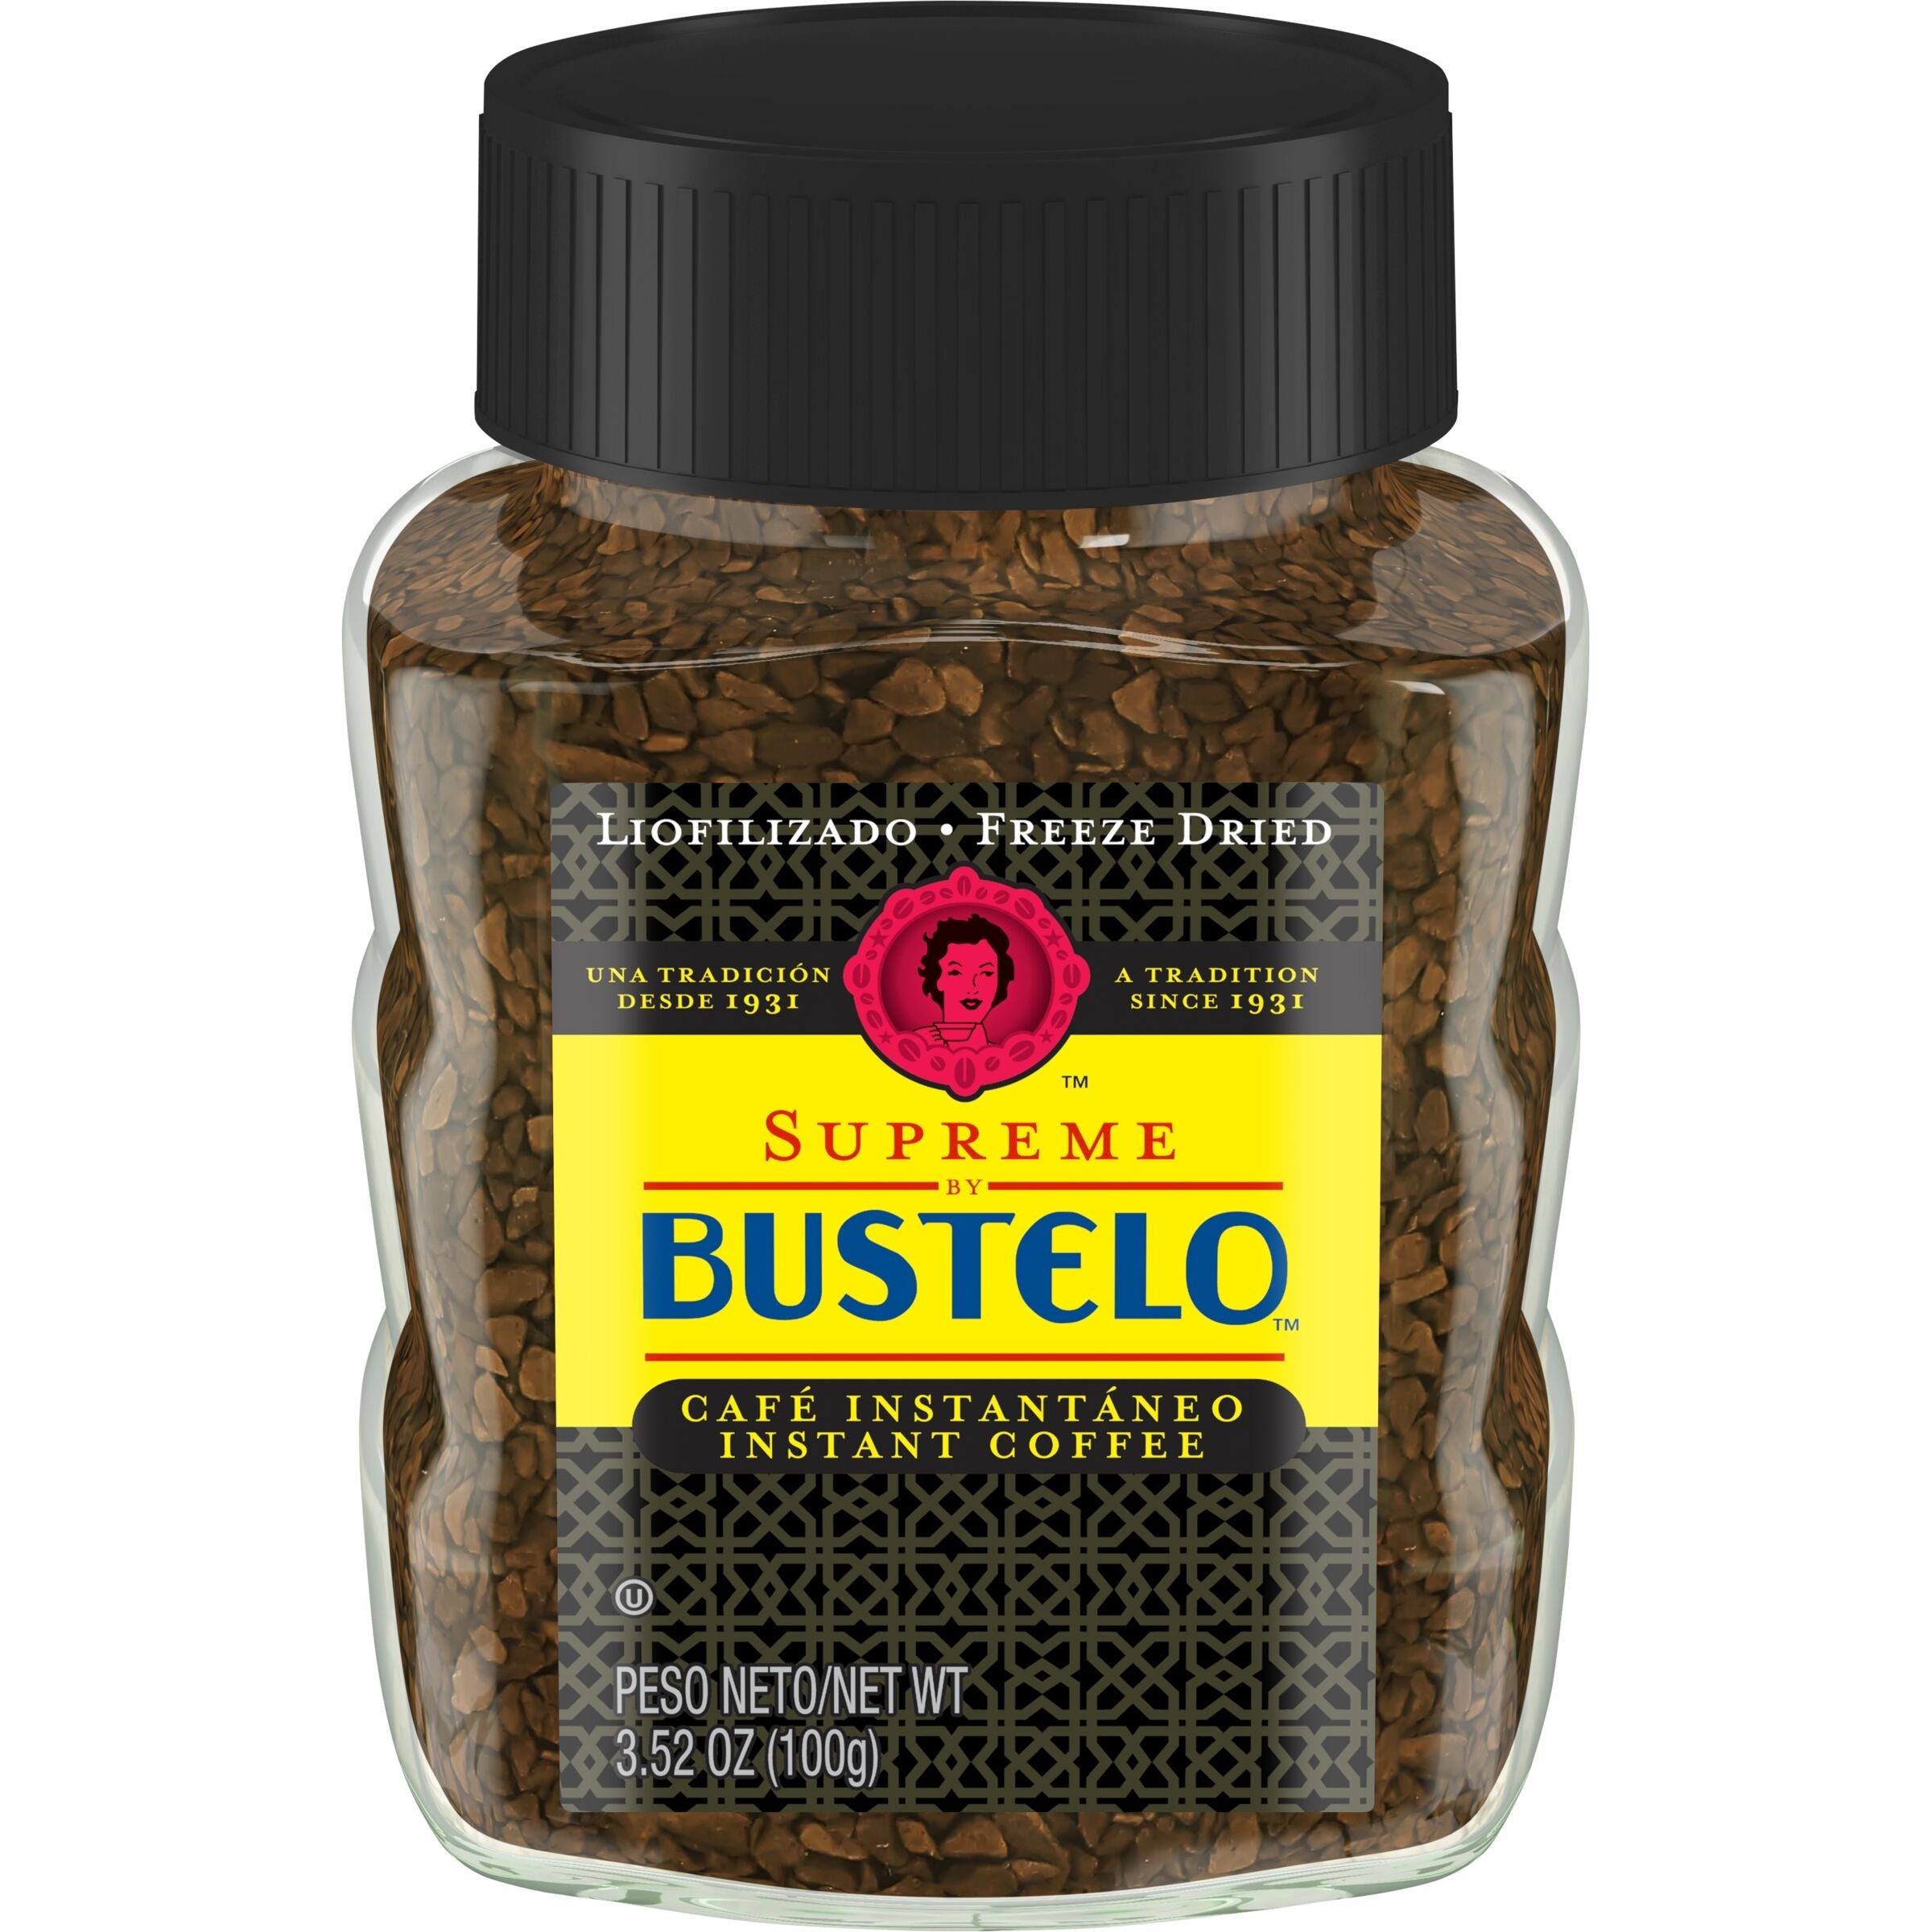 Supreme by Bustelo, Freeze-Dried Instant Coffee, 3.52 oz